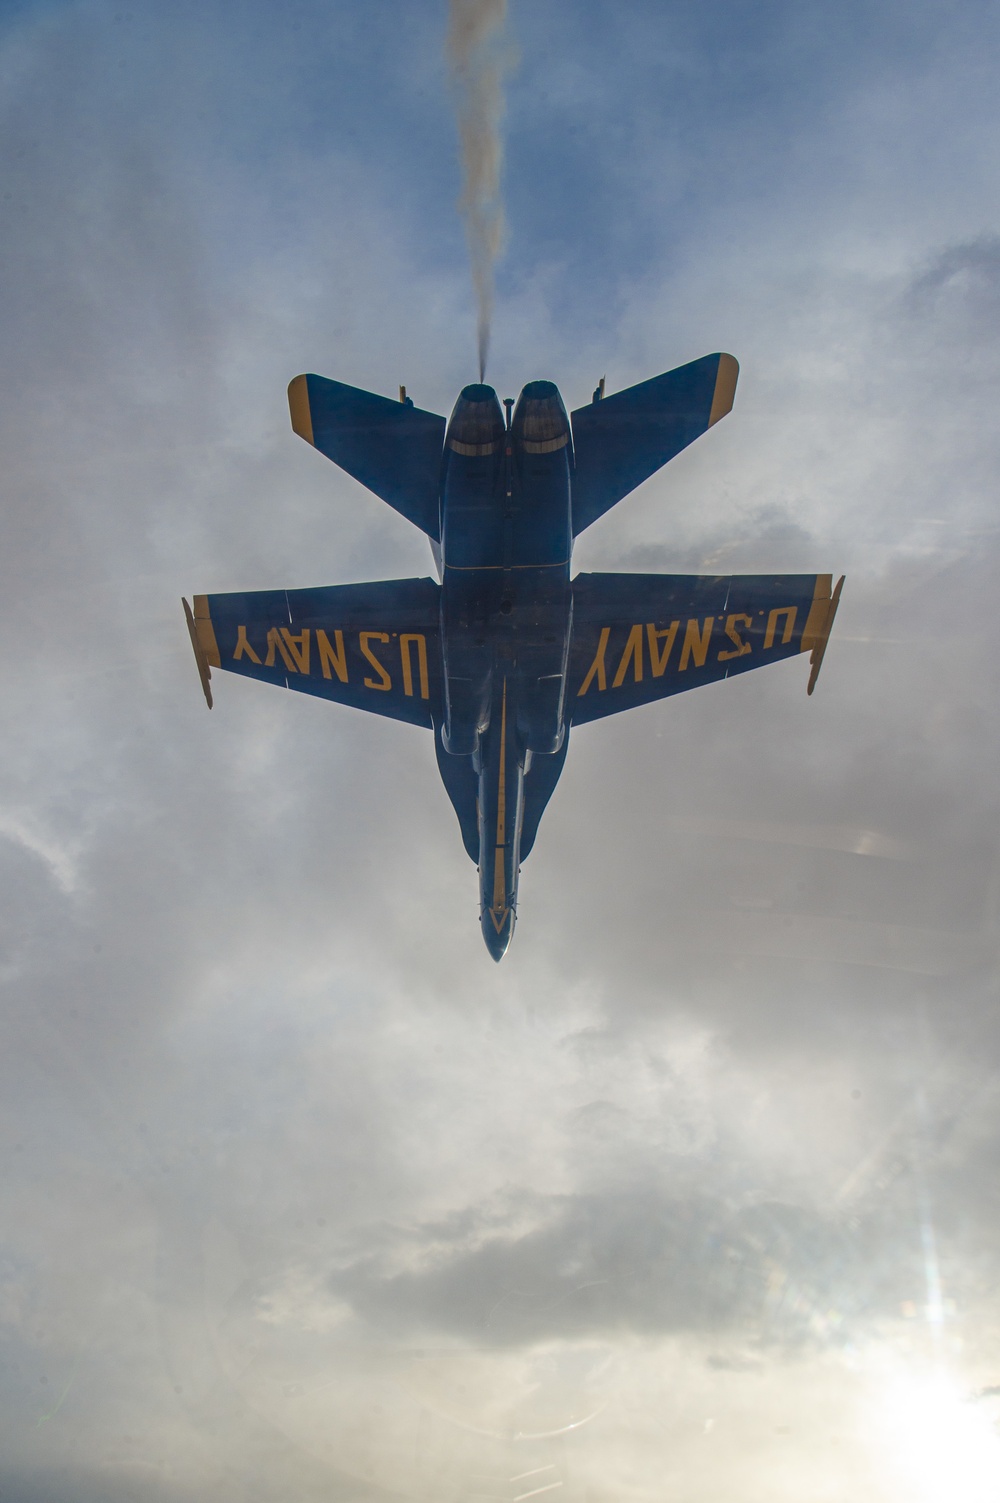 DVIDS Images Blue Angels Winter Training Flight [Image 1 of 5]